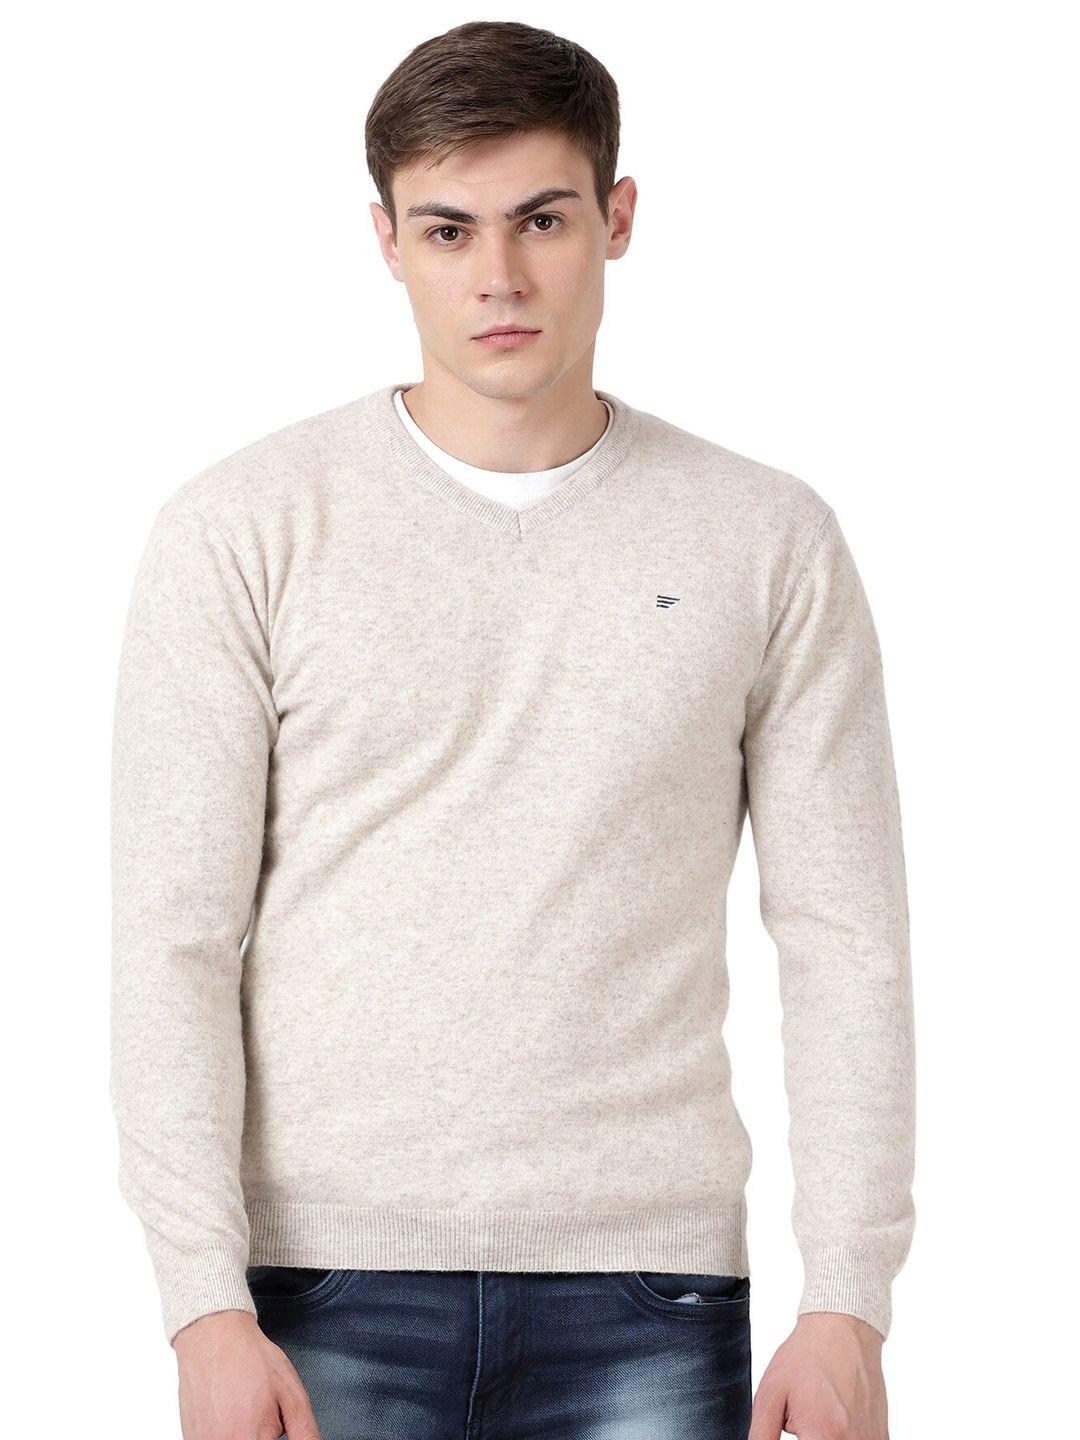 t-base v-neck woollen pullover sweater